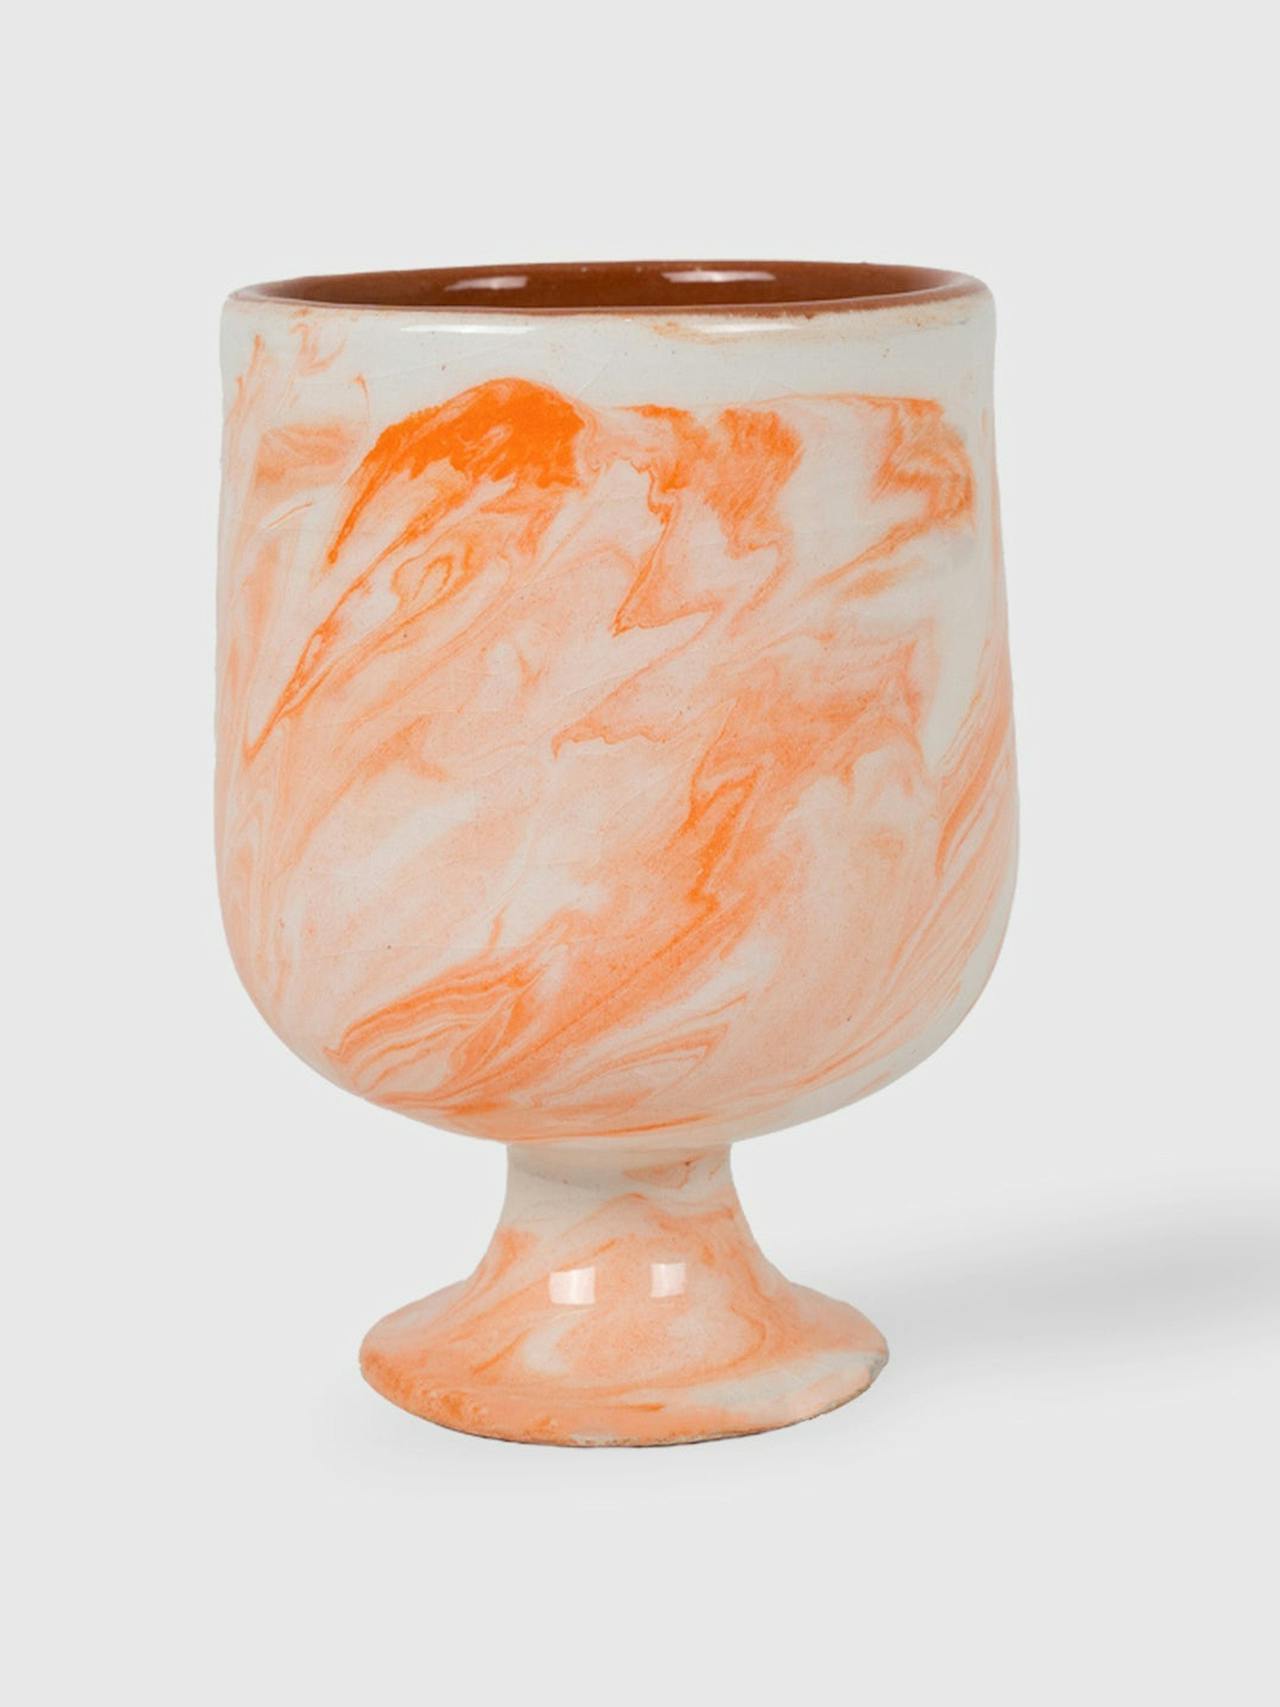 Nebula cup, clementine